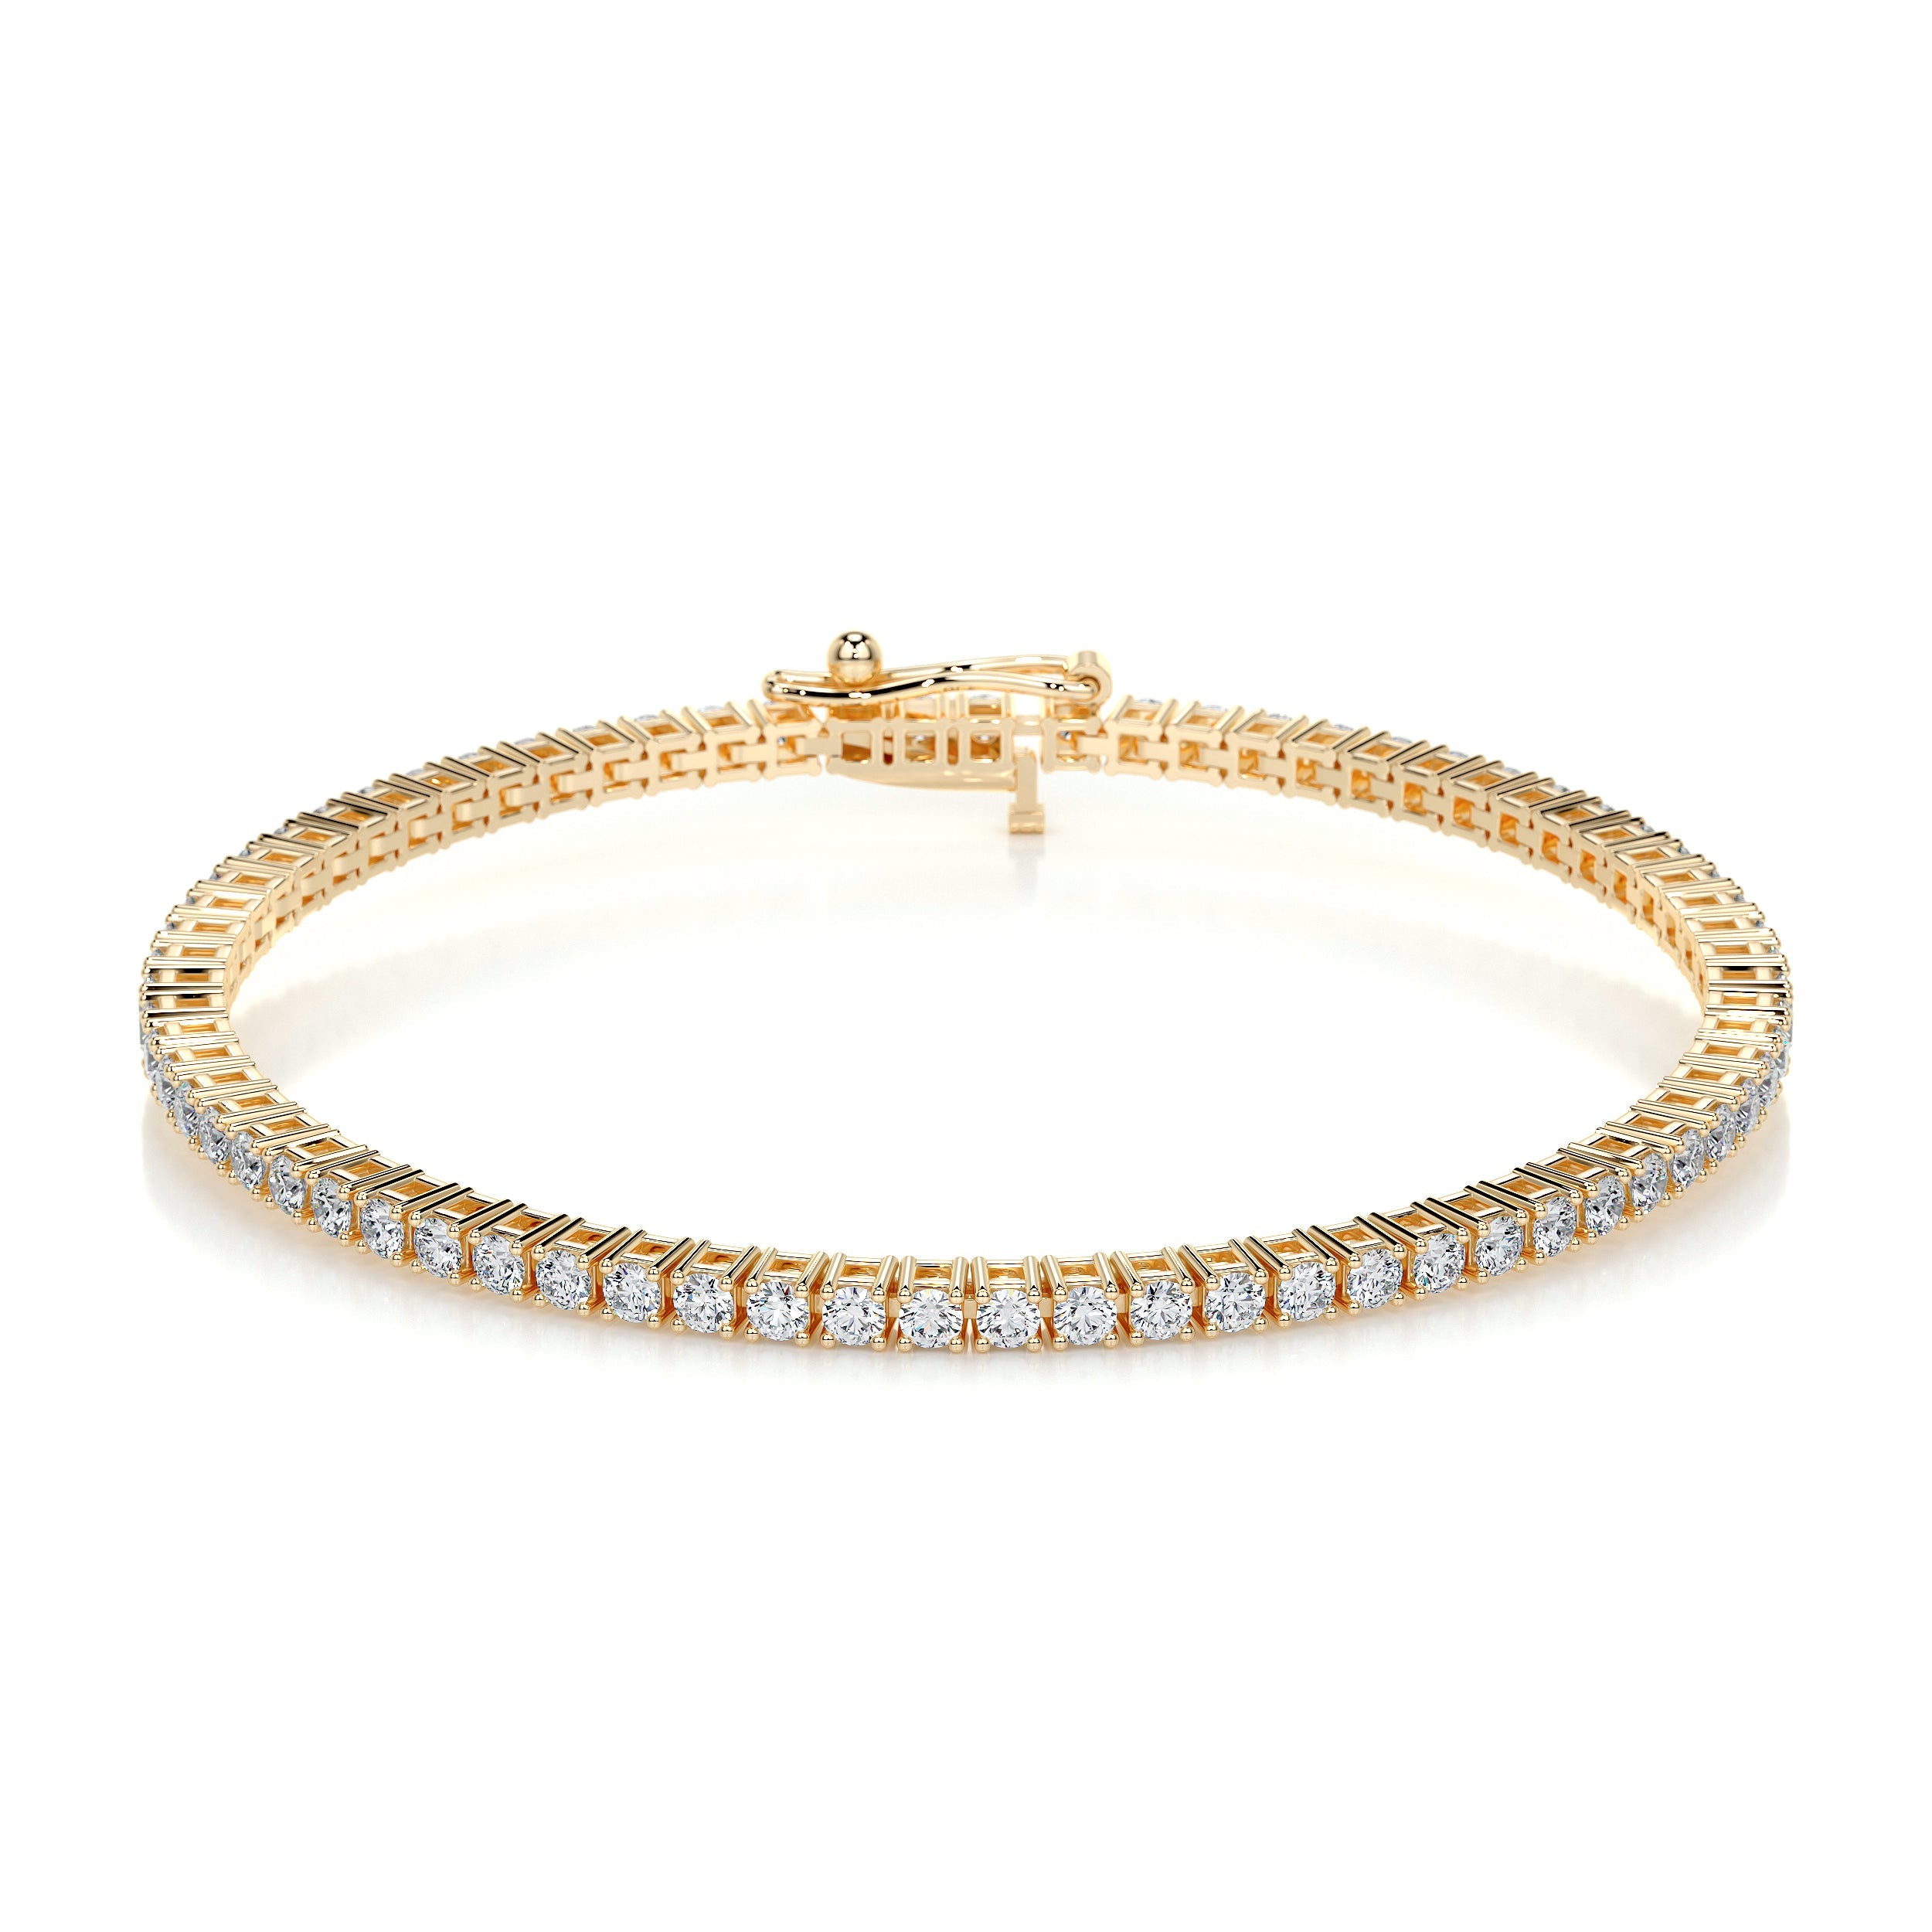 Sidney Tennis Lab Grown Diamonds Bracelet   (2.5 Carat) -18K Yellow Gold